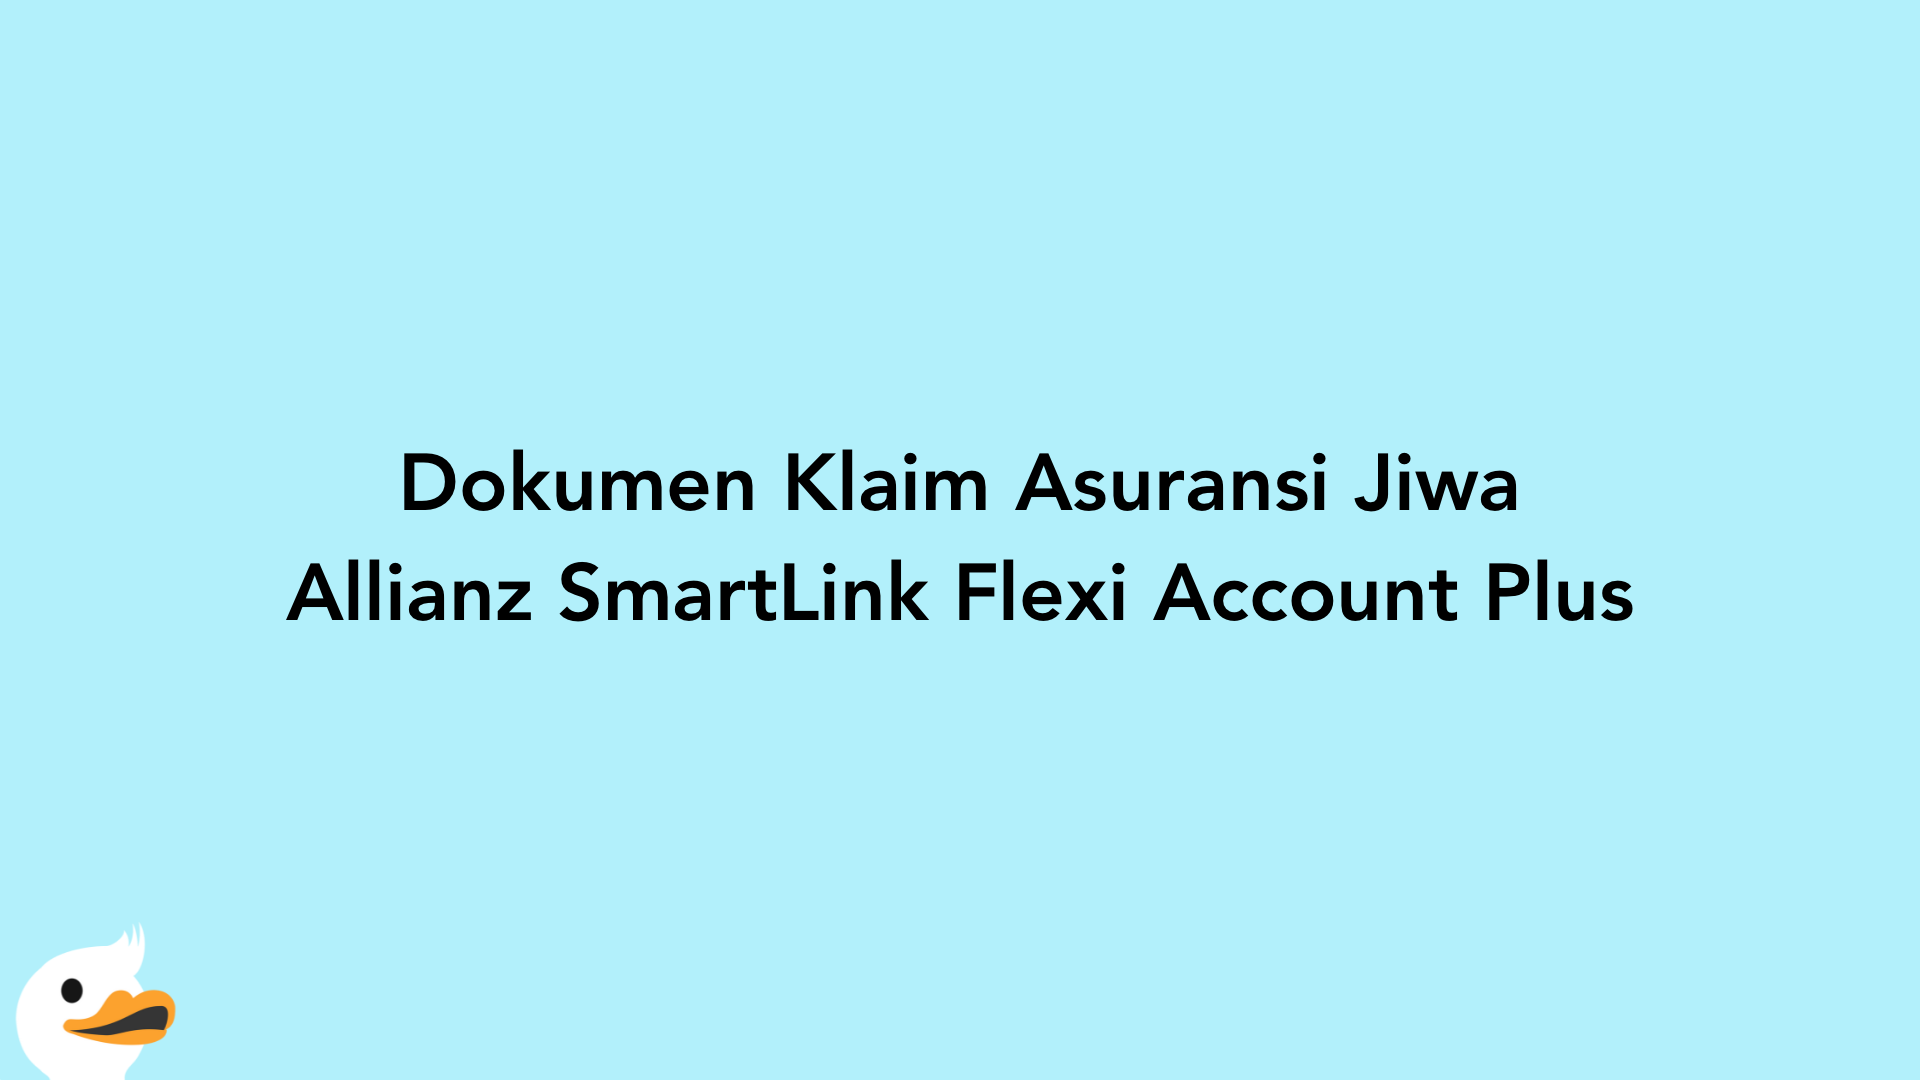 Dokumen Klaim Asuransi Jiwa Allianz SmartLink Flexi Account Plus